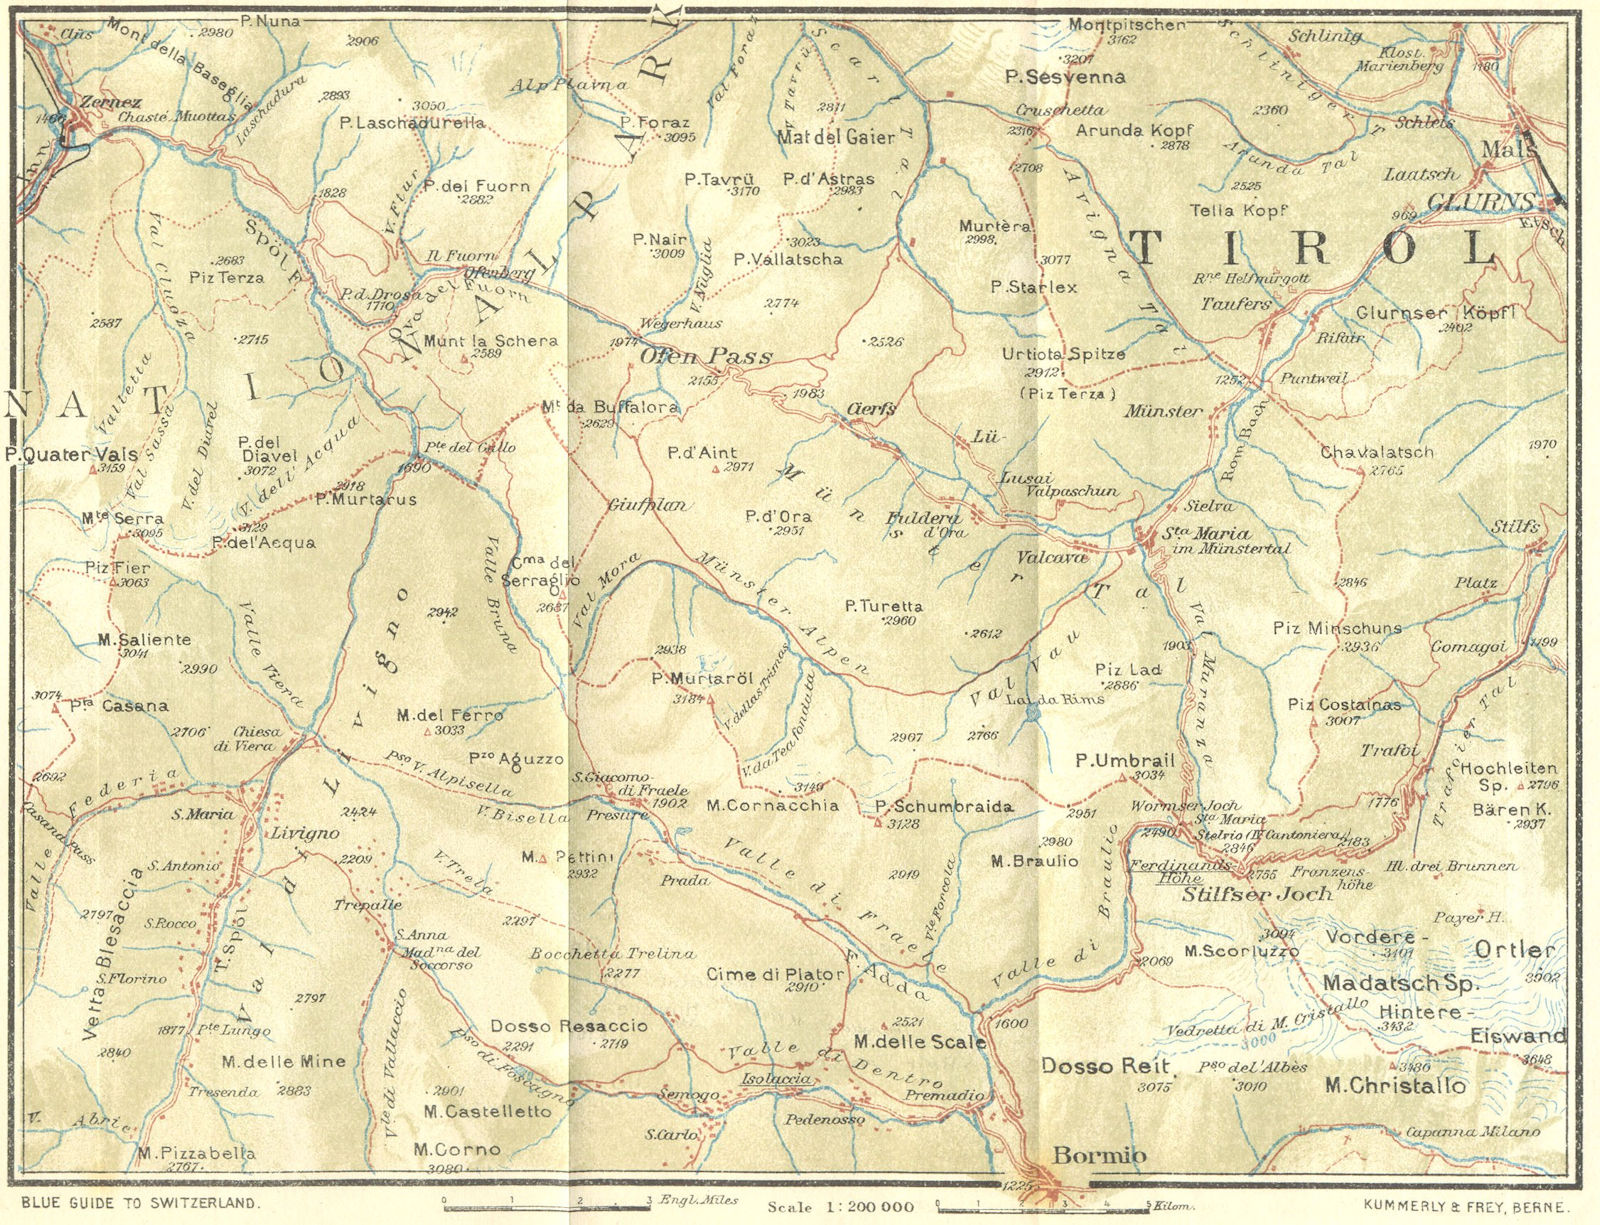 TIROL. Zernetz-Munster-Stelvio Pass Bormio 1923 old antique map plan chart